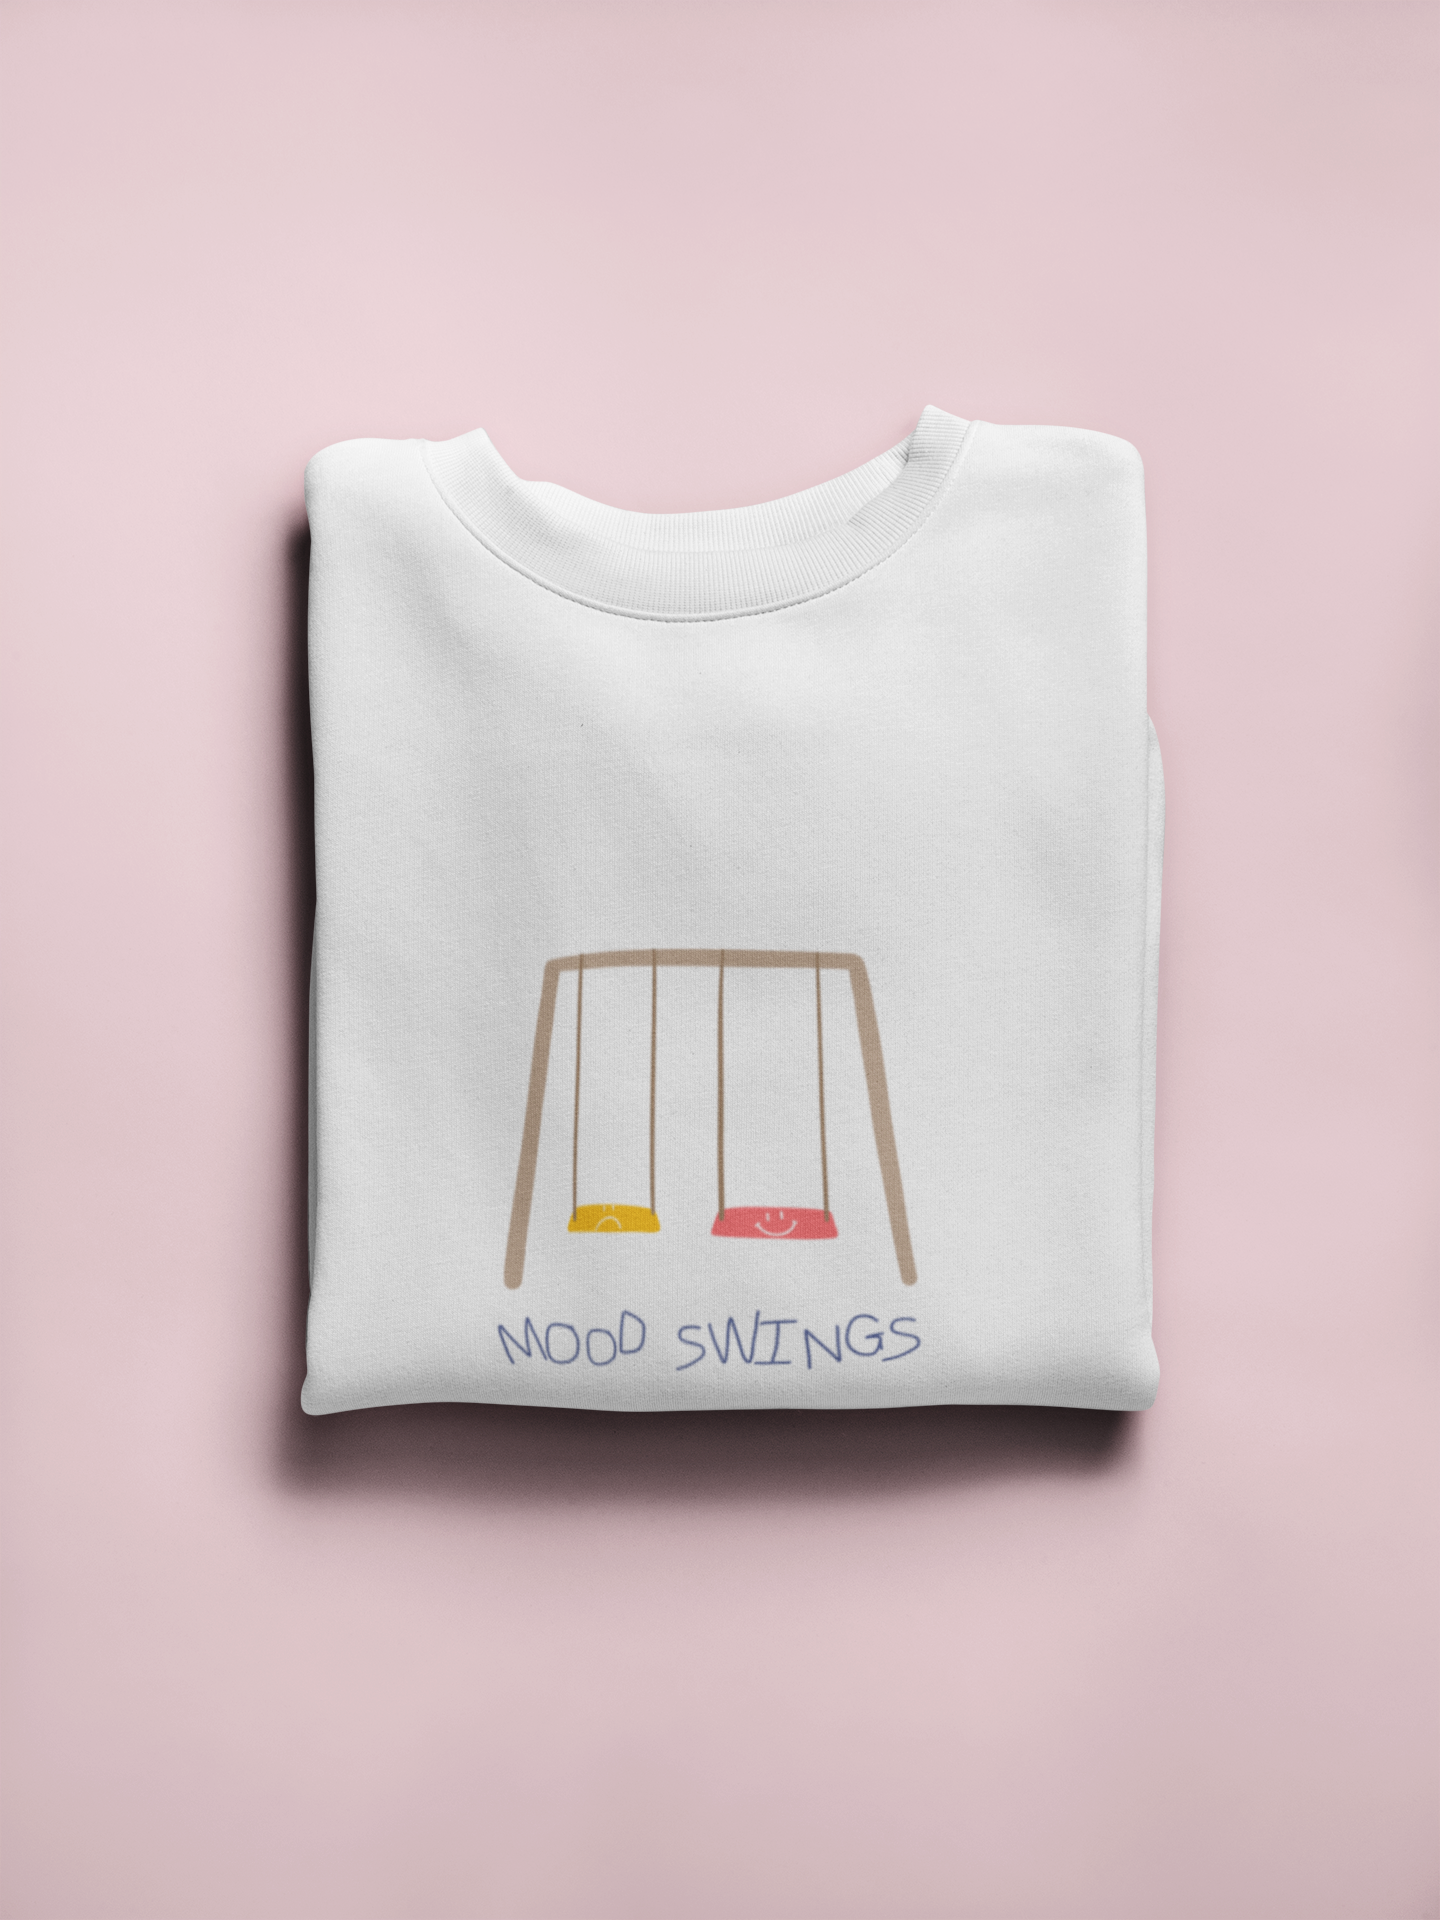 Mood swings sweatshirt